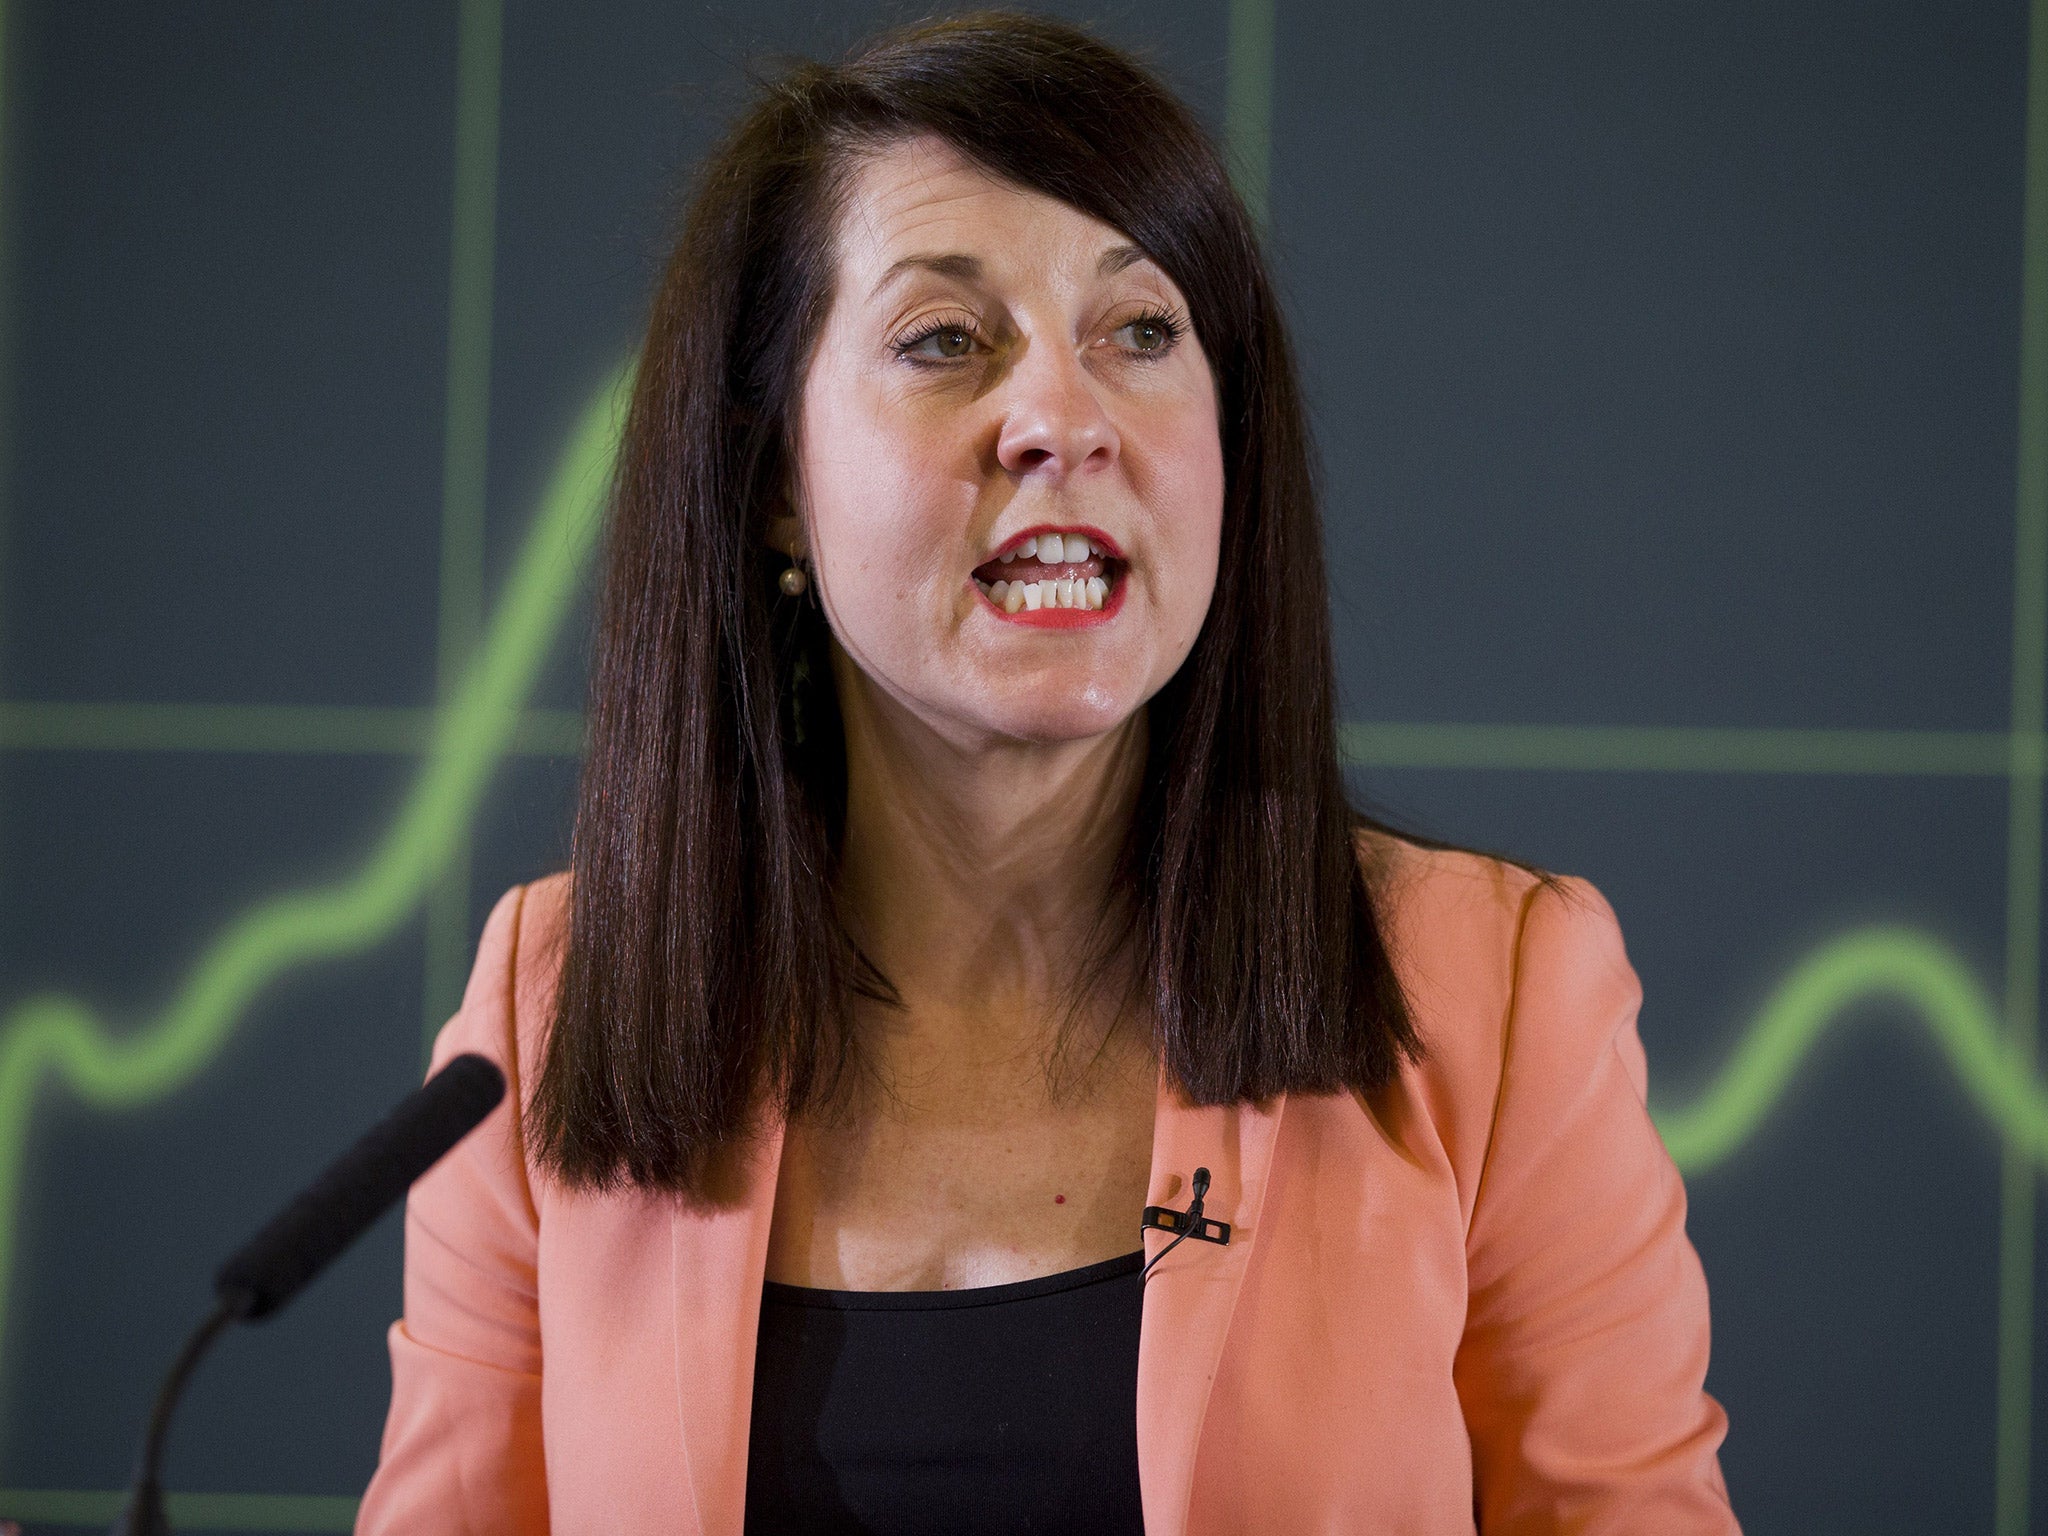 Labour leadership contender Liz Kendall